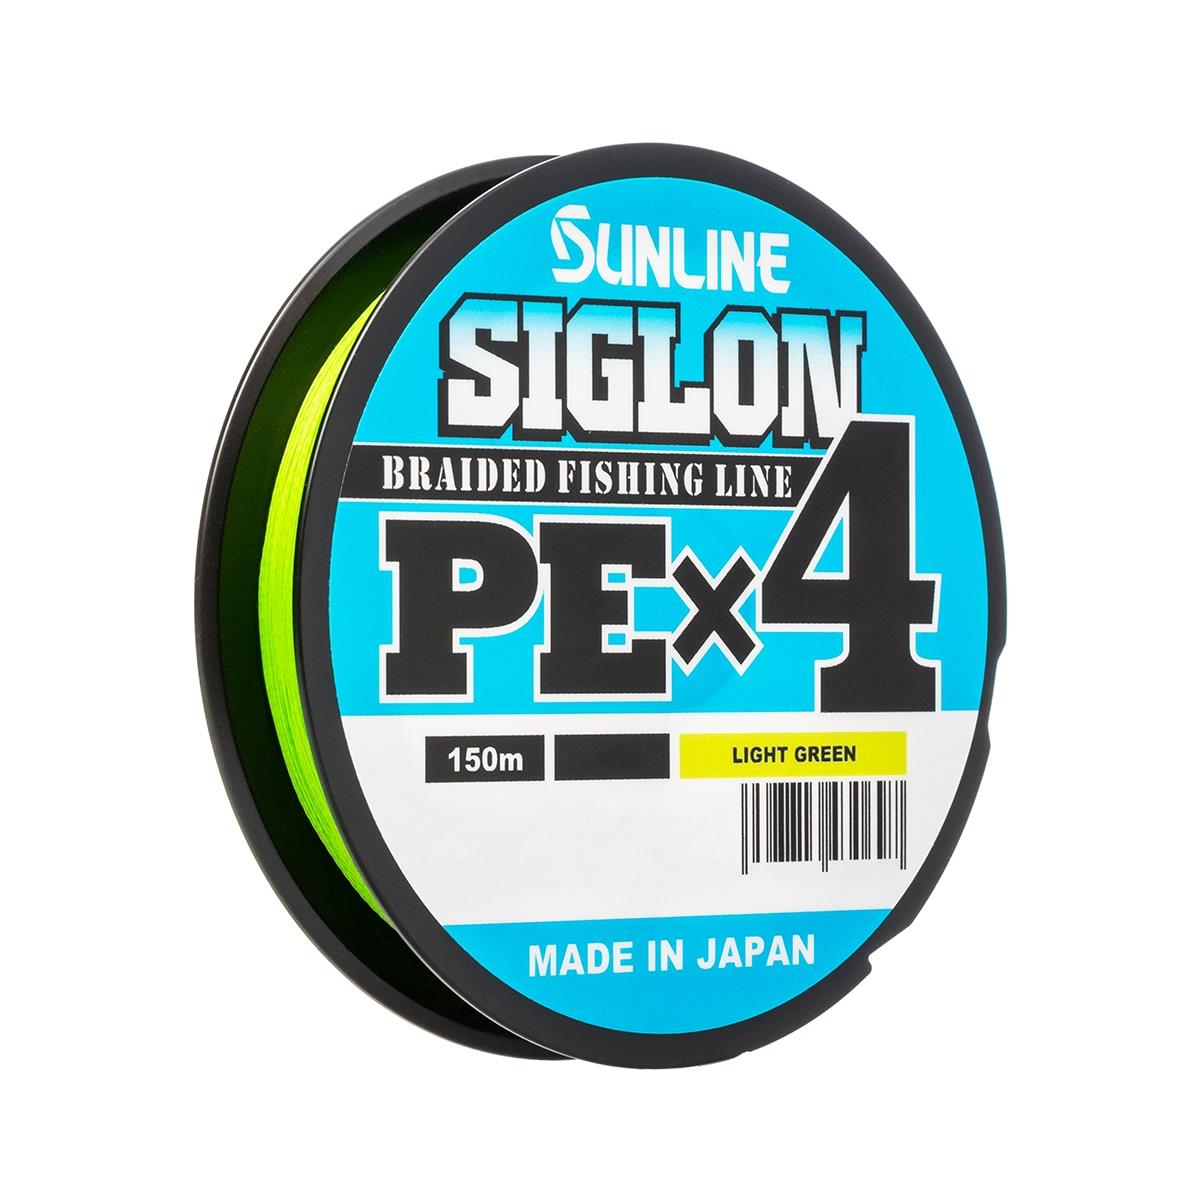 Шнур SIGLON PE×4 150 м (Light green) Sunline шнур для вязания 100% полиэфир 1мм 200м 75±10гр 09 кофе